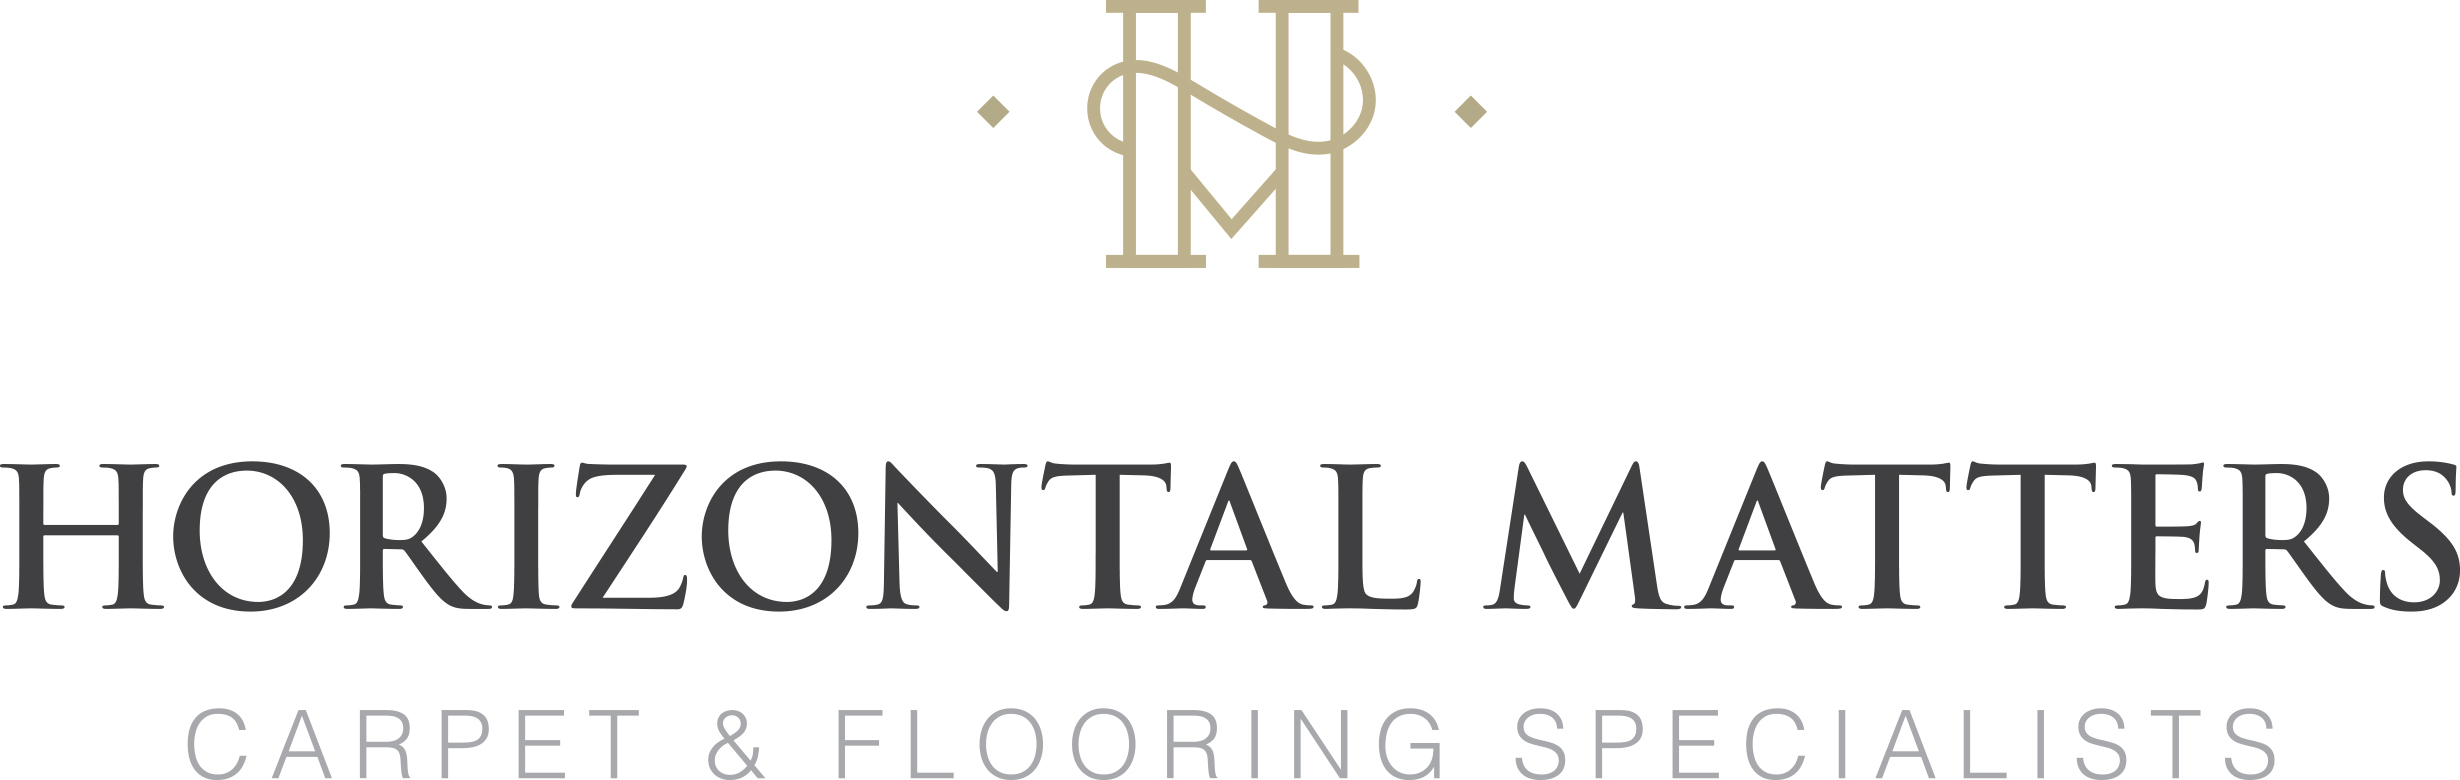 Horizontal Matters Ltd